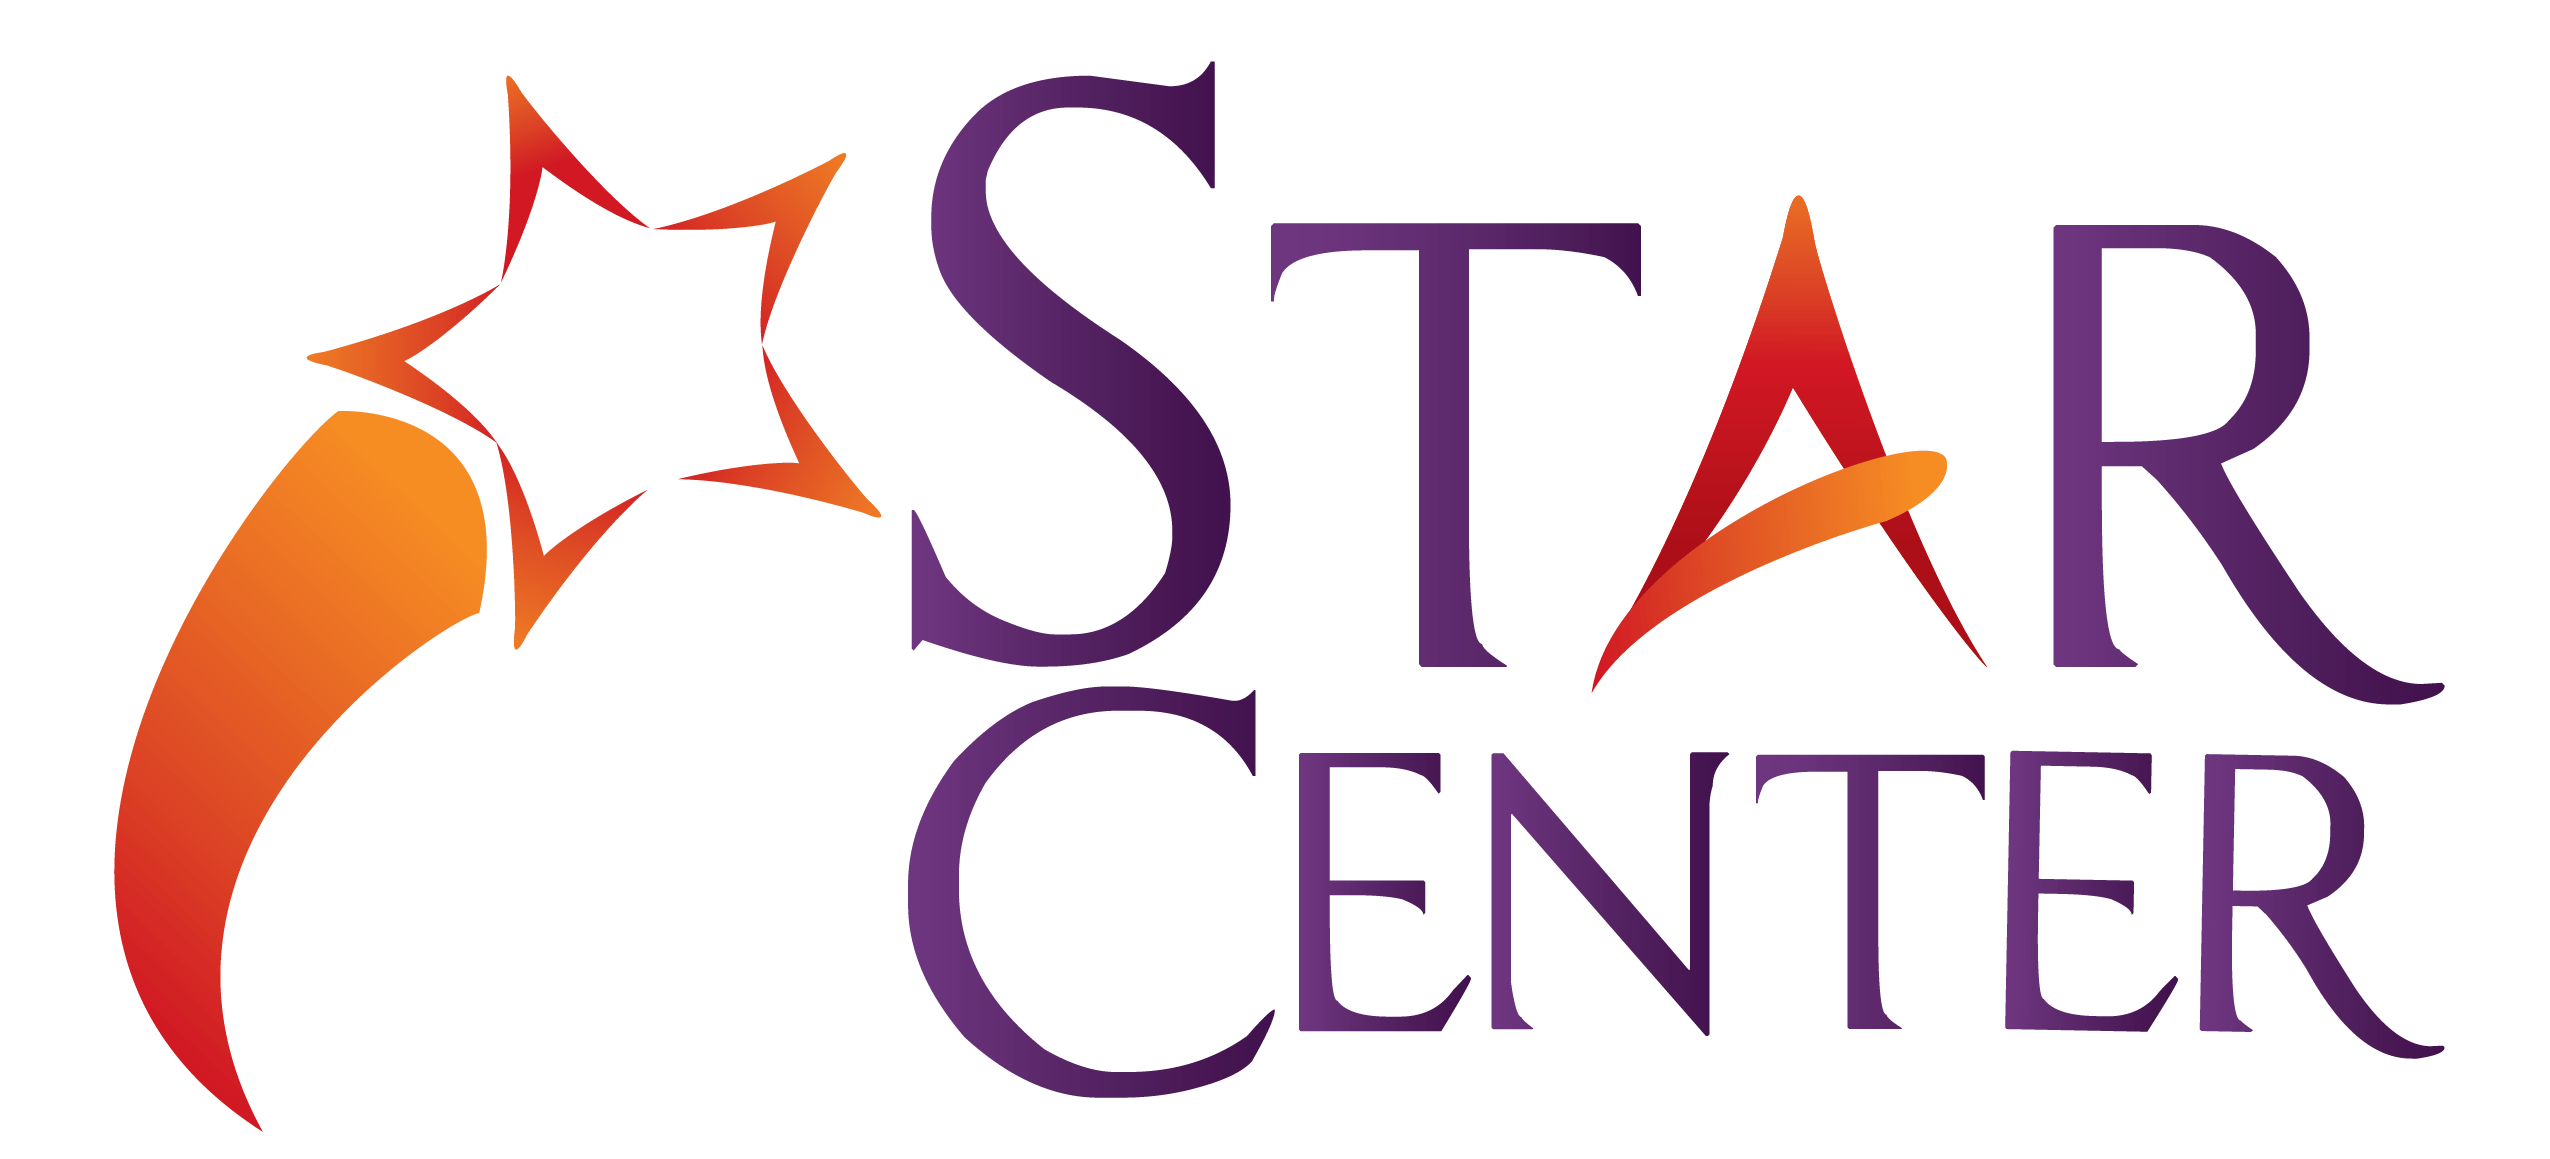 Center Logo - Visual Identity - STAR Center